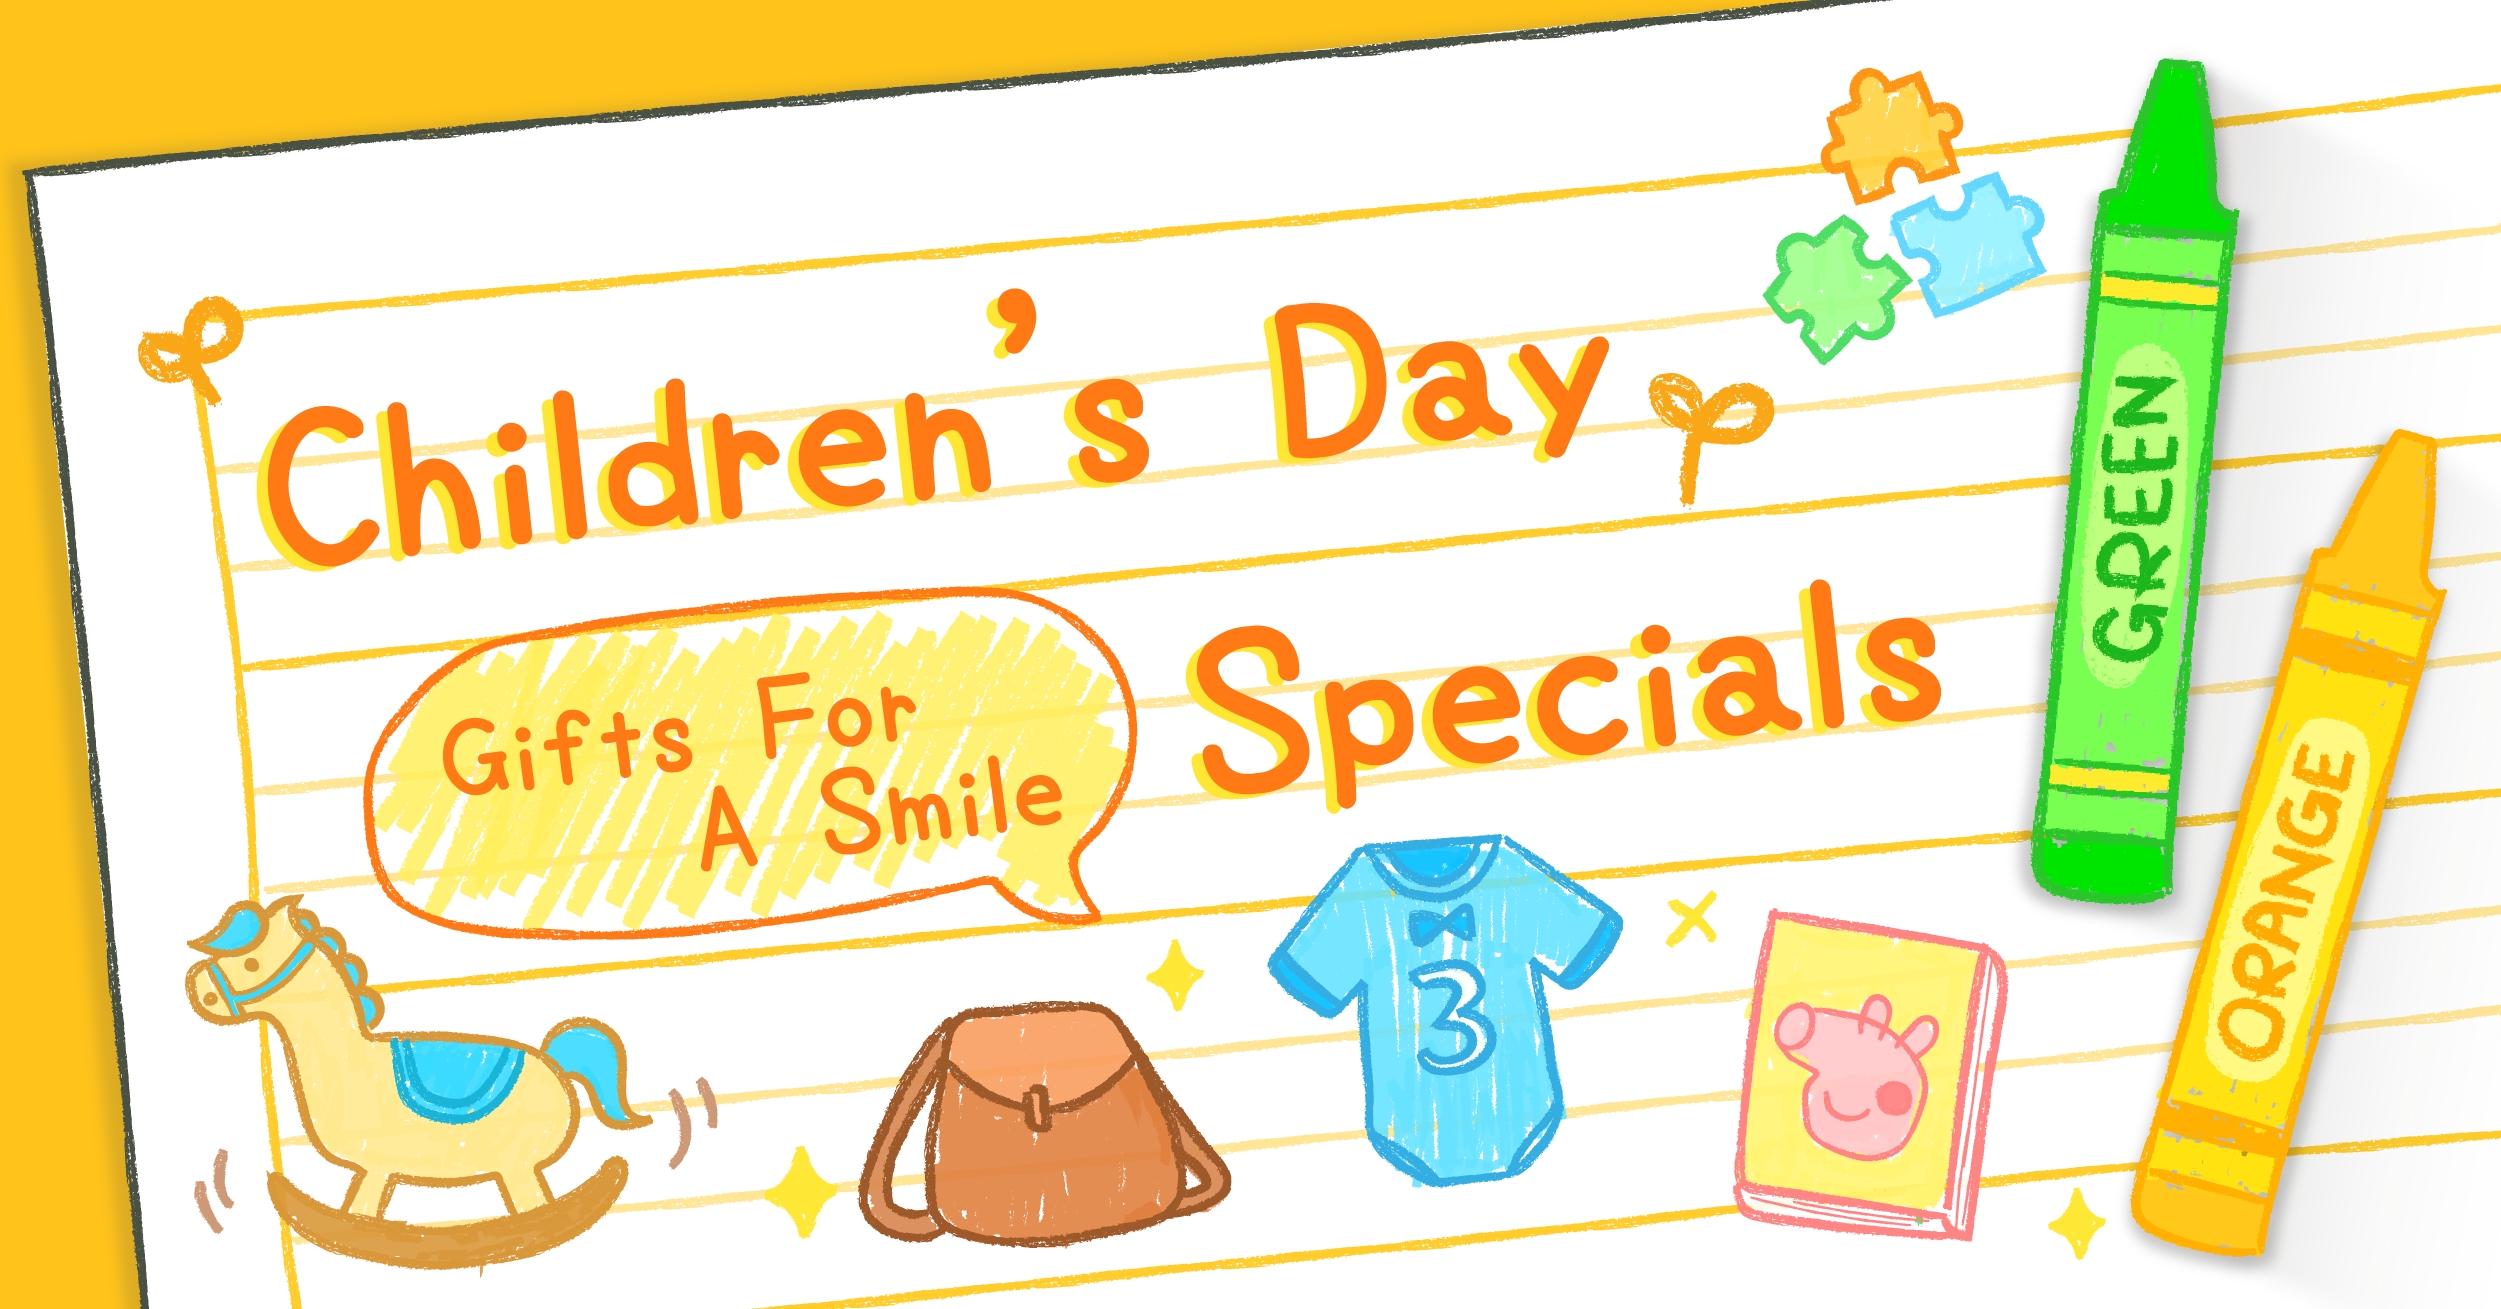 Childrens Day 2019 Shopping Guide Buyandship Hong Kong